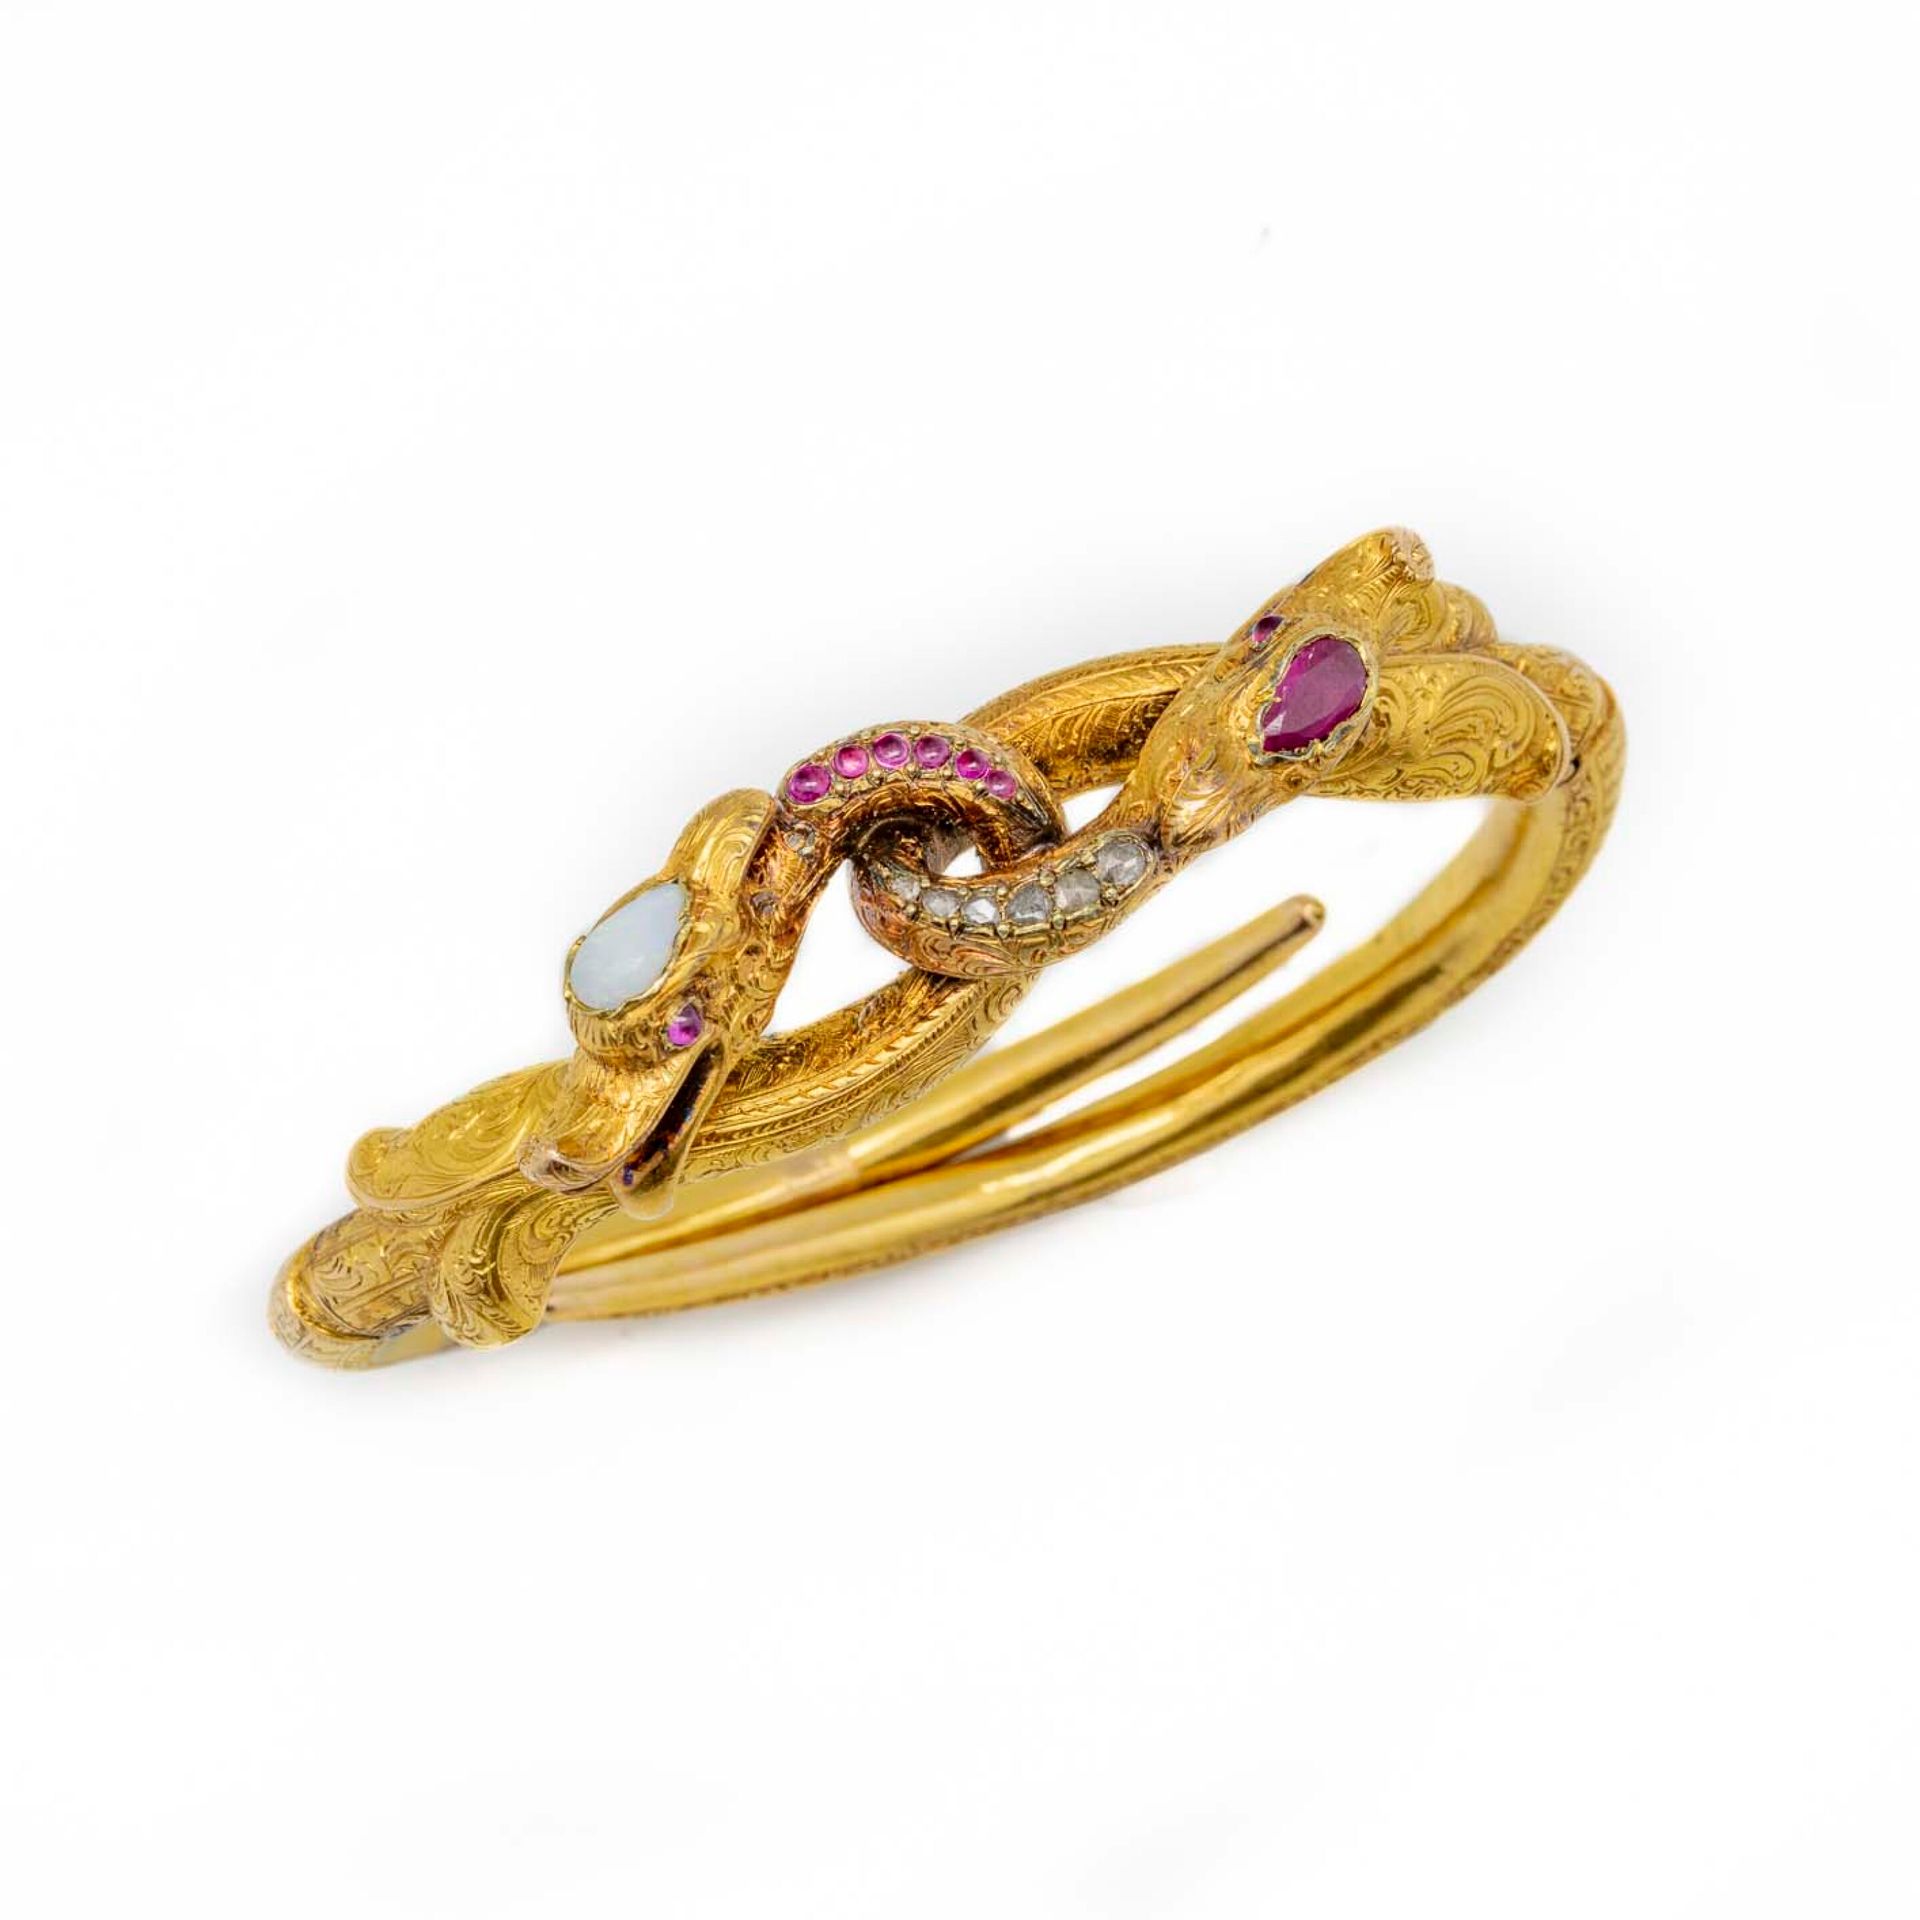 Null 黄金手镯，两个蛇头交织在一起，形成一个有鳞片装饰的衔接手镯

重量：27克。

拿破仑三世时期